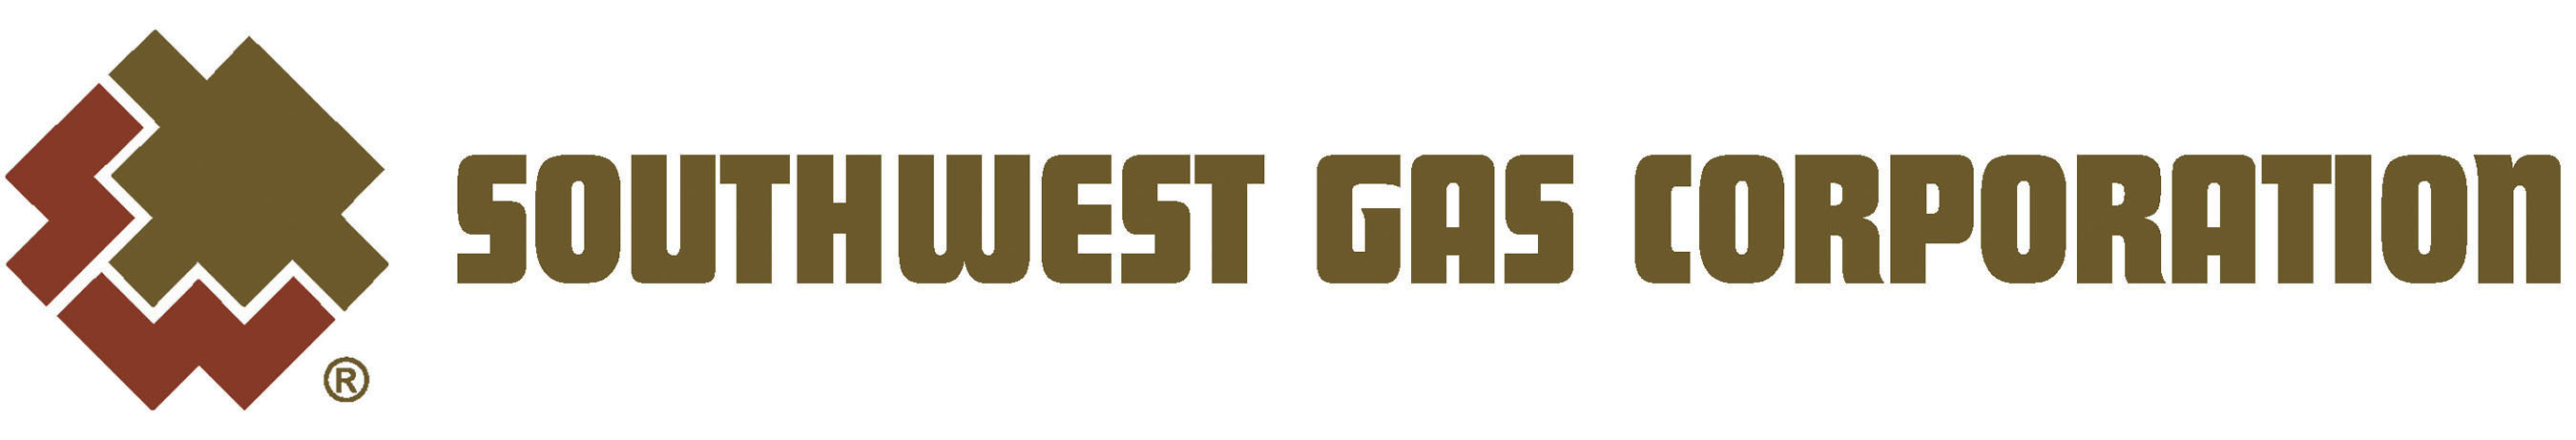 Southwest Gas Corporation Logo.